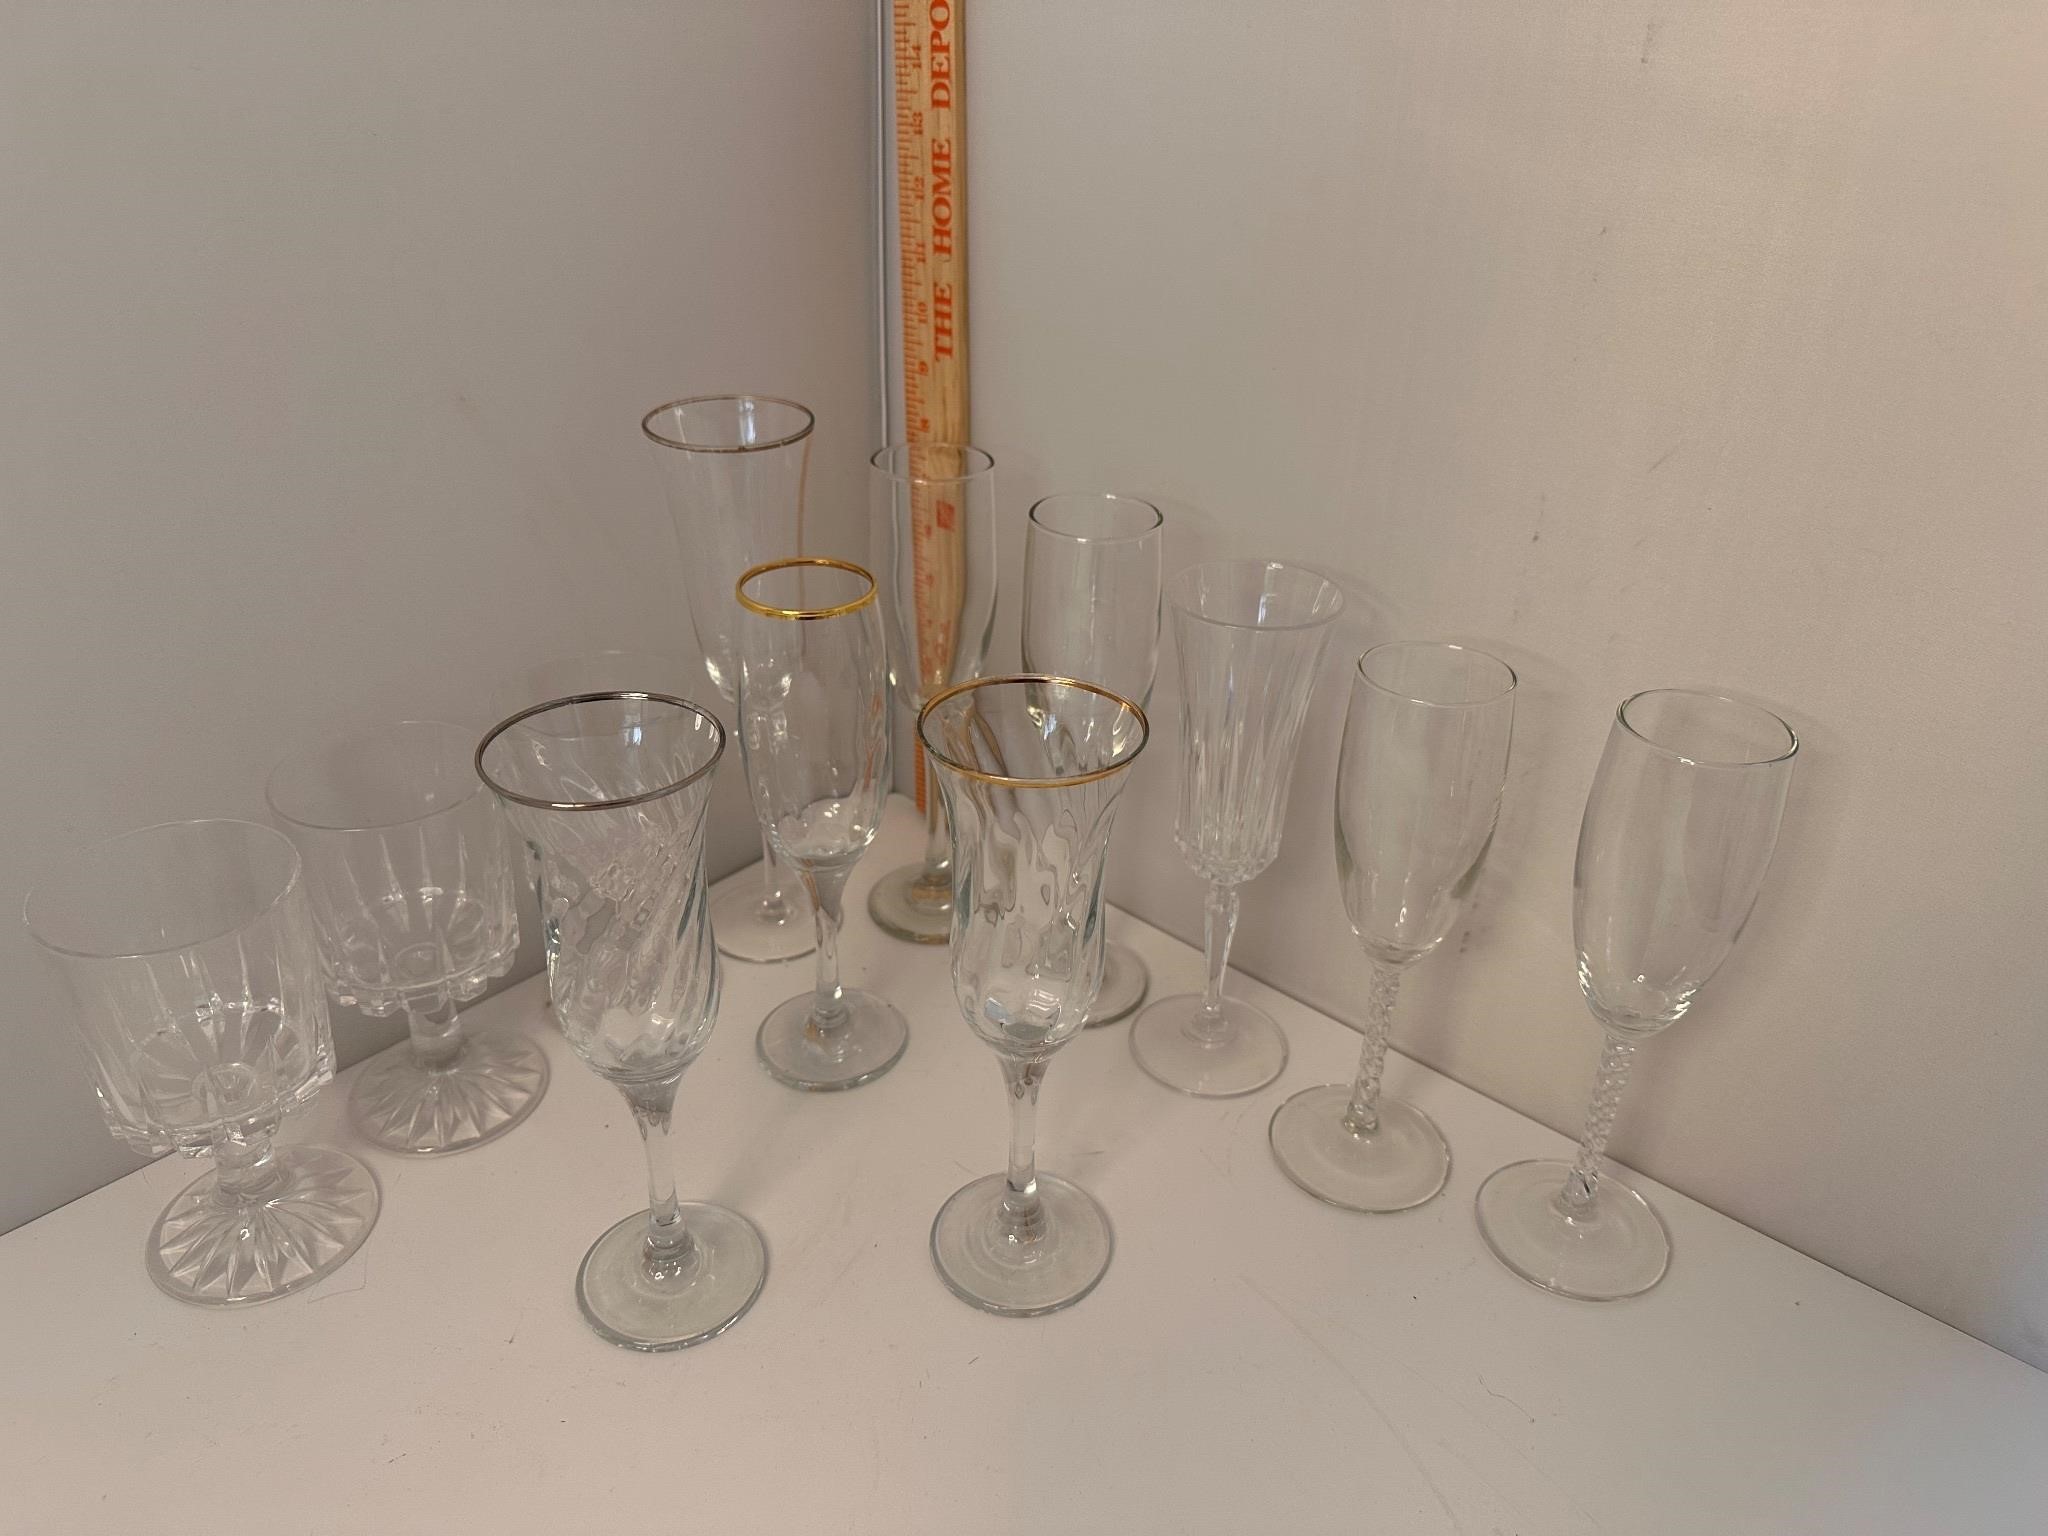 Several nice stemware glasses